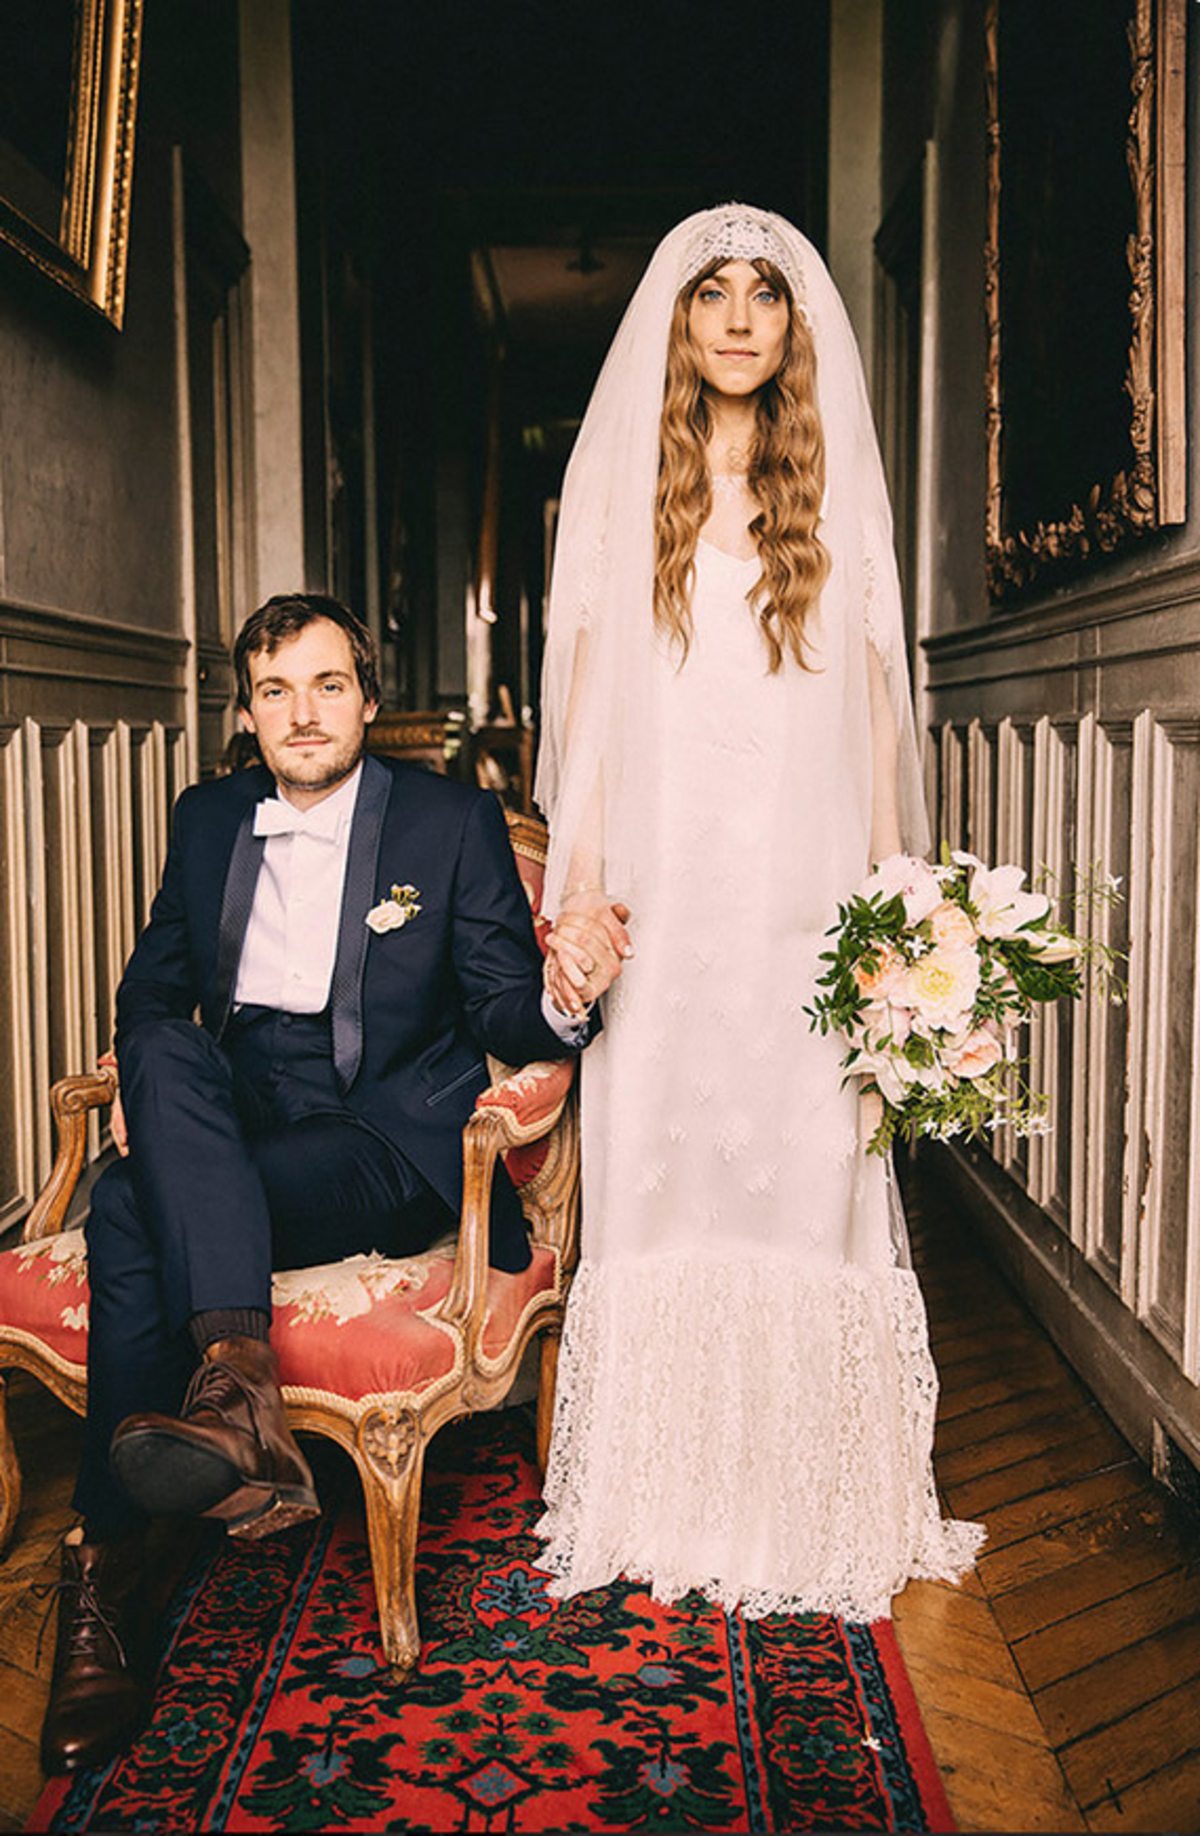 wedding themes - bride wearing an antique veil holding sitting husbands hand